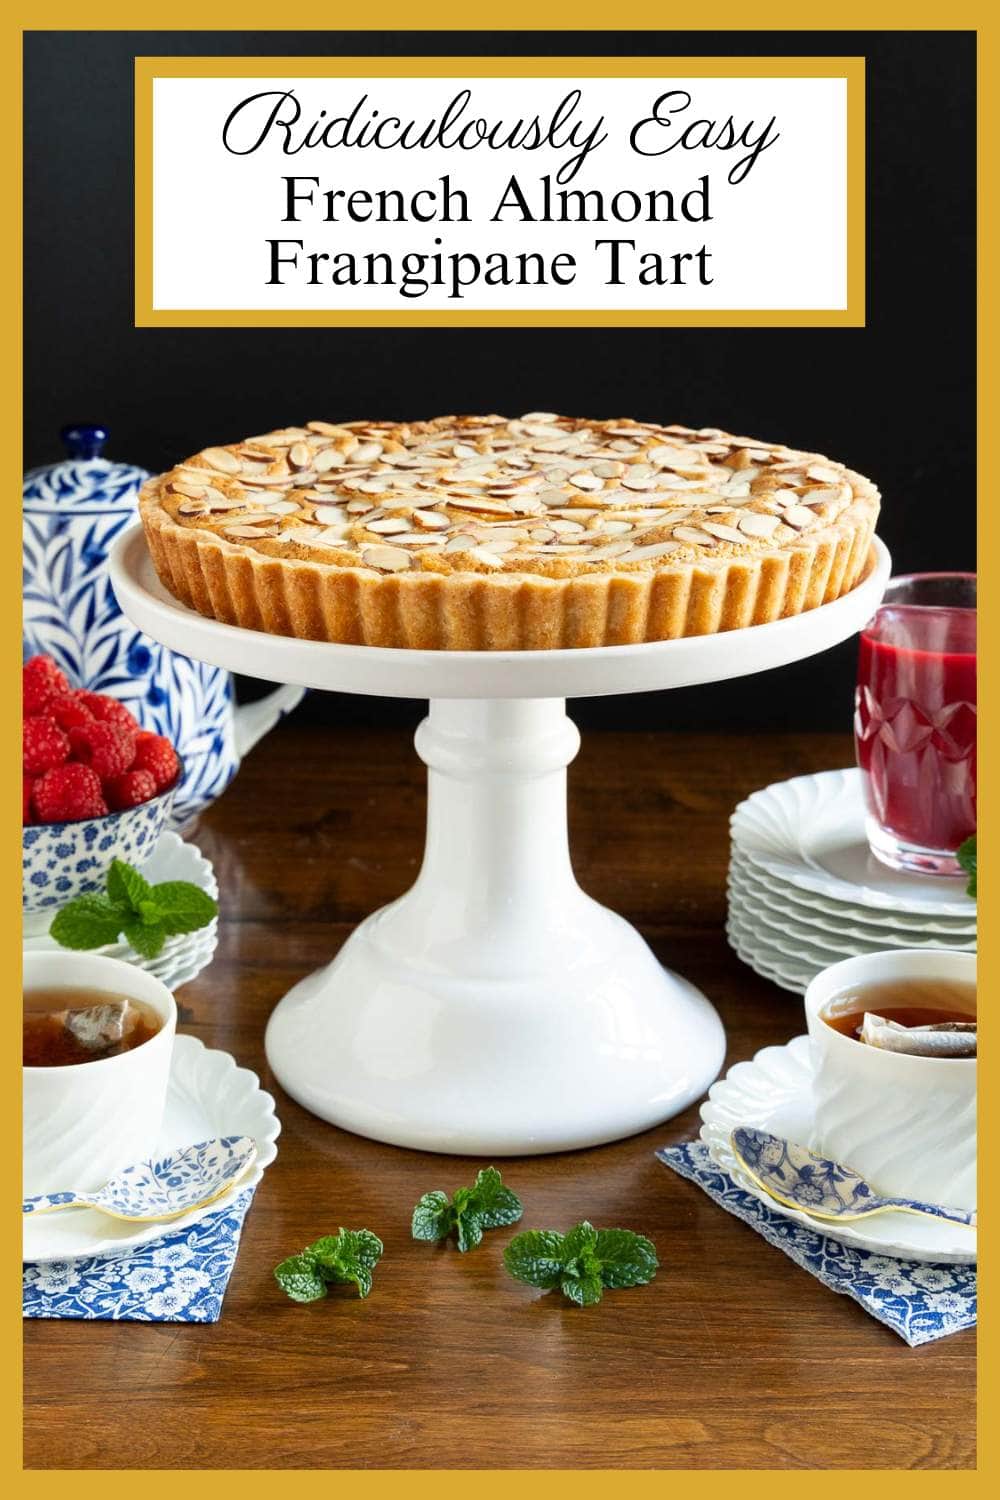 Ridiculously Easy French Almond Frangipane Tart (Tarte Frangipane aux Amandes)